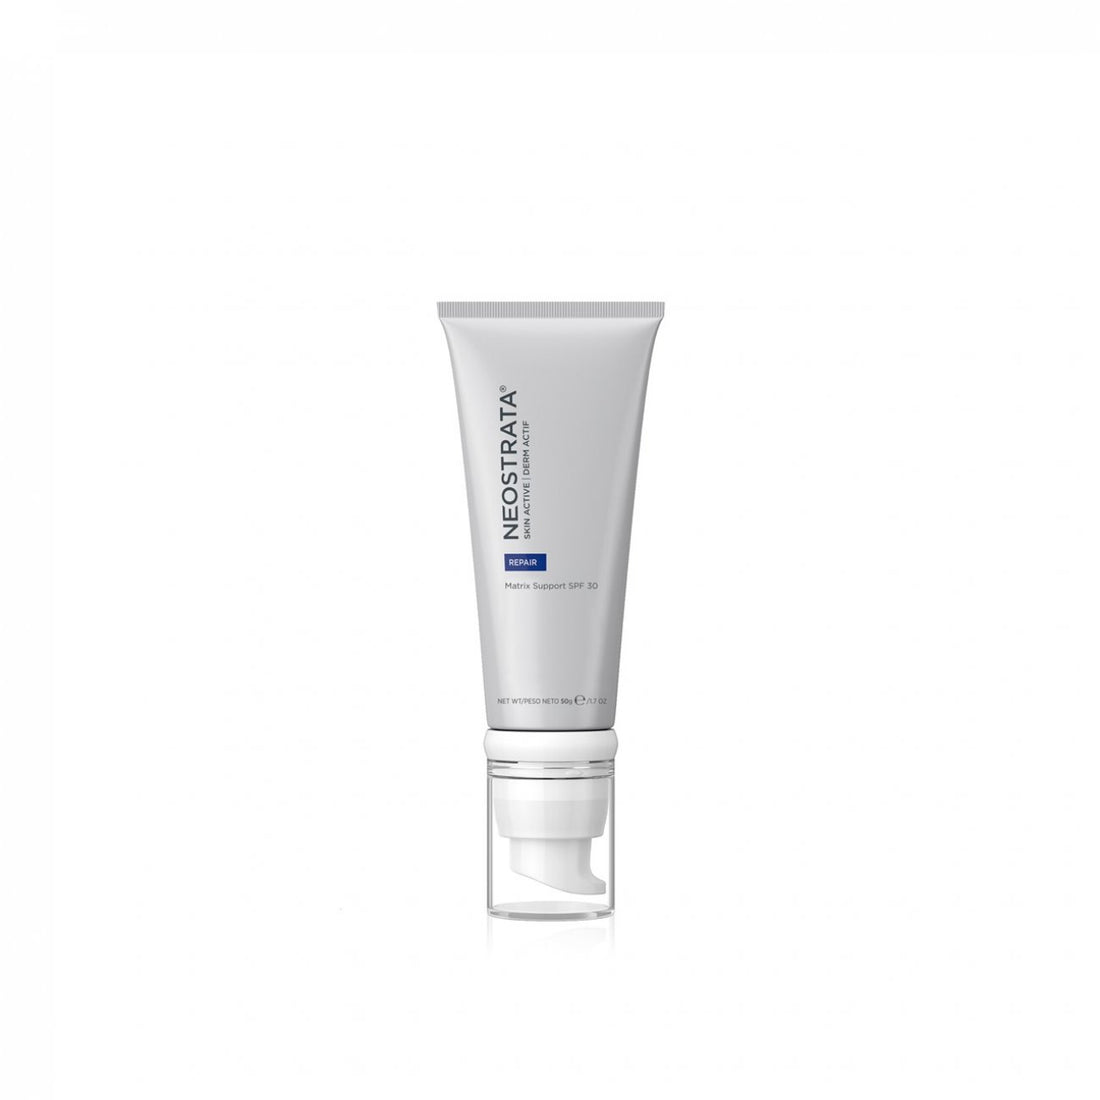 NeoStrata Skin Active Matrix Support Concentrated Cream SPF30 50g